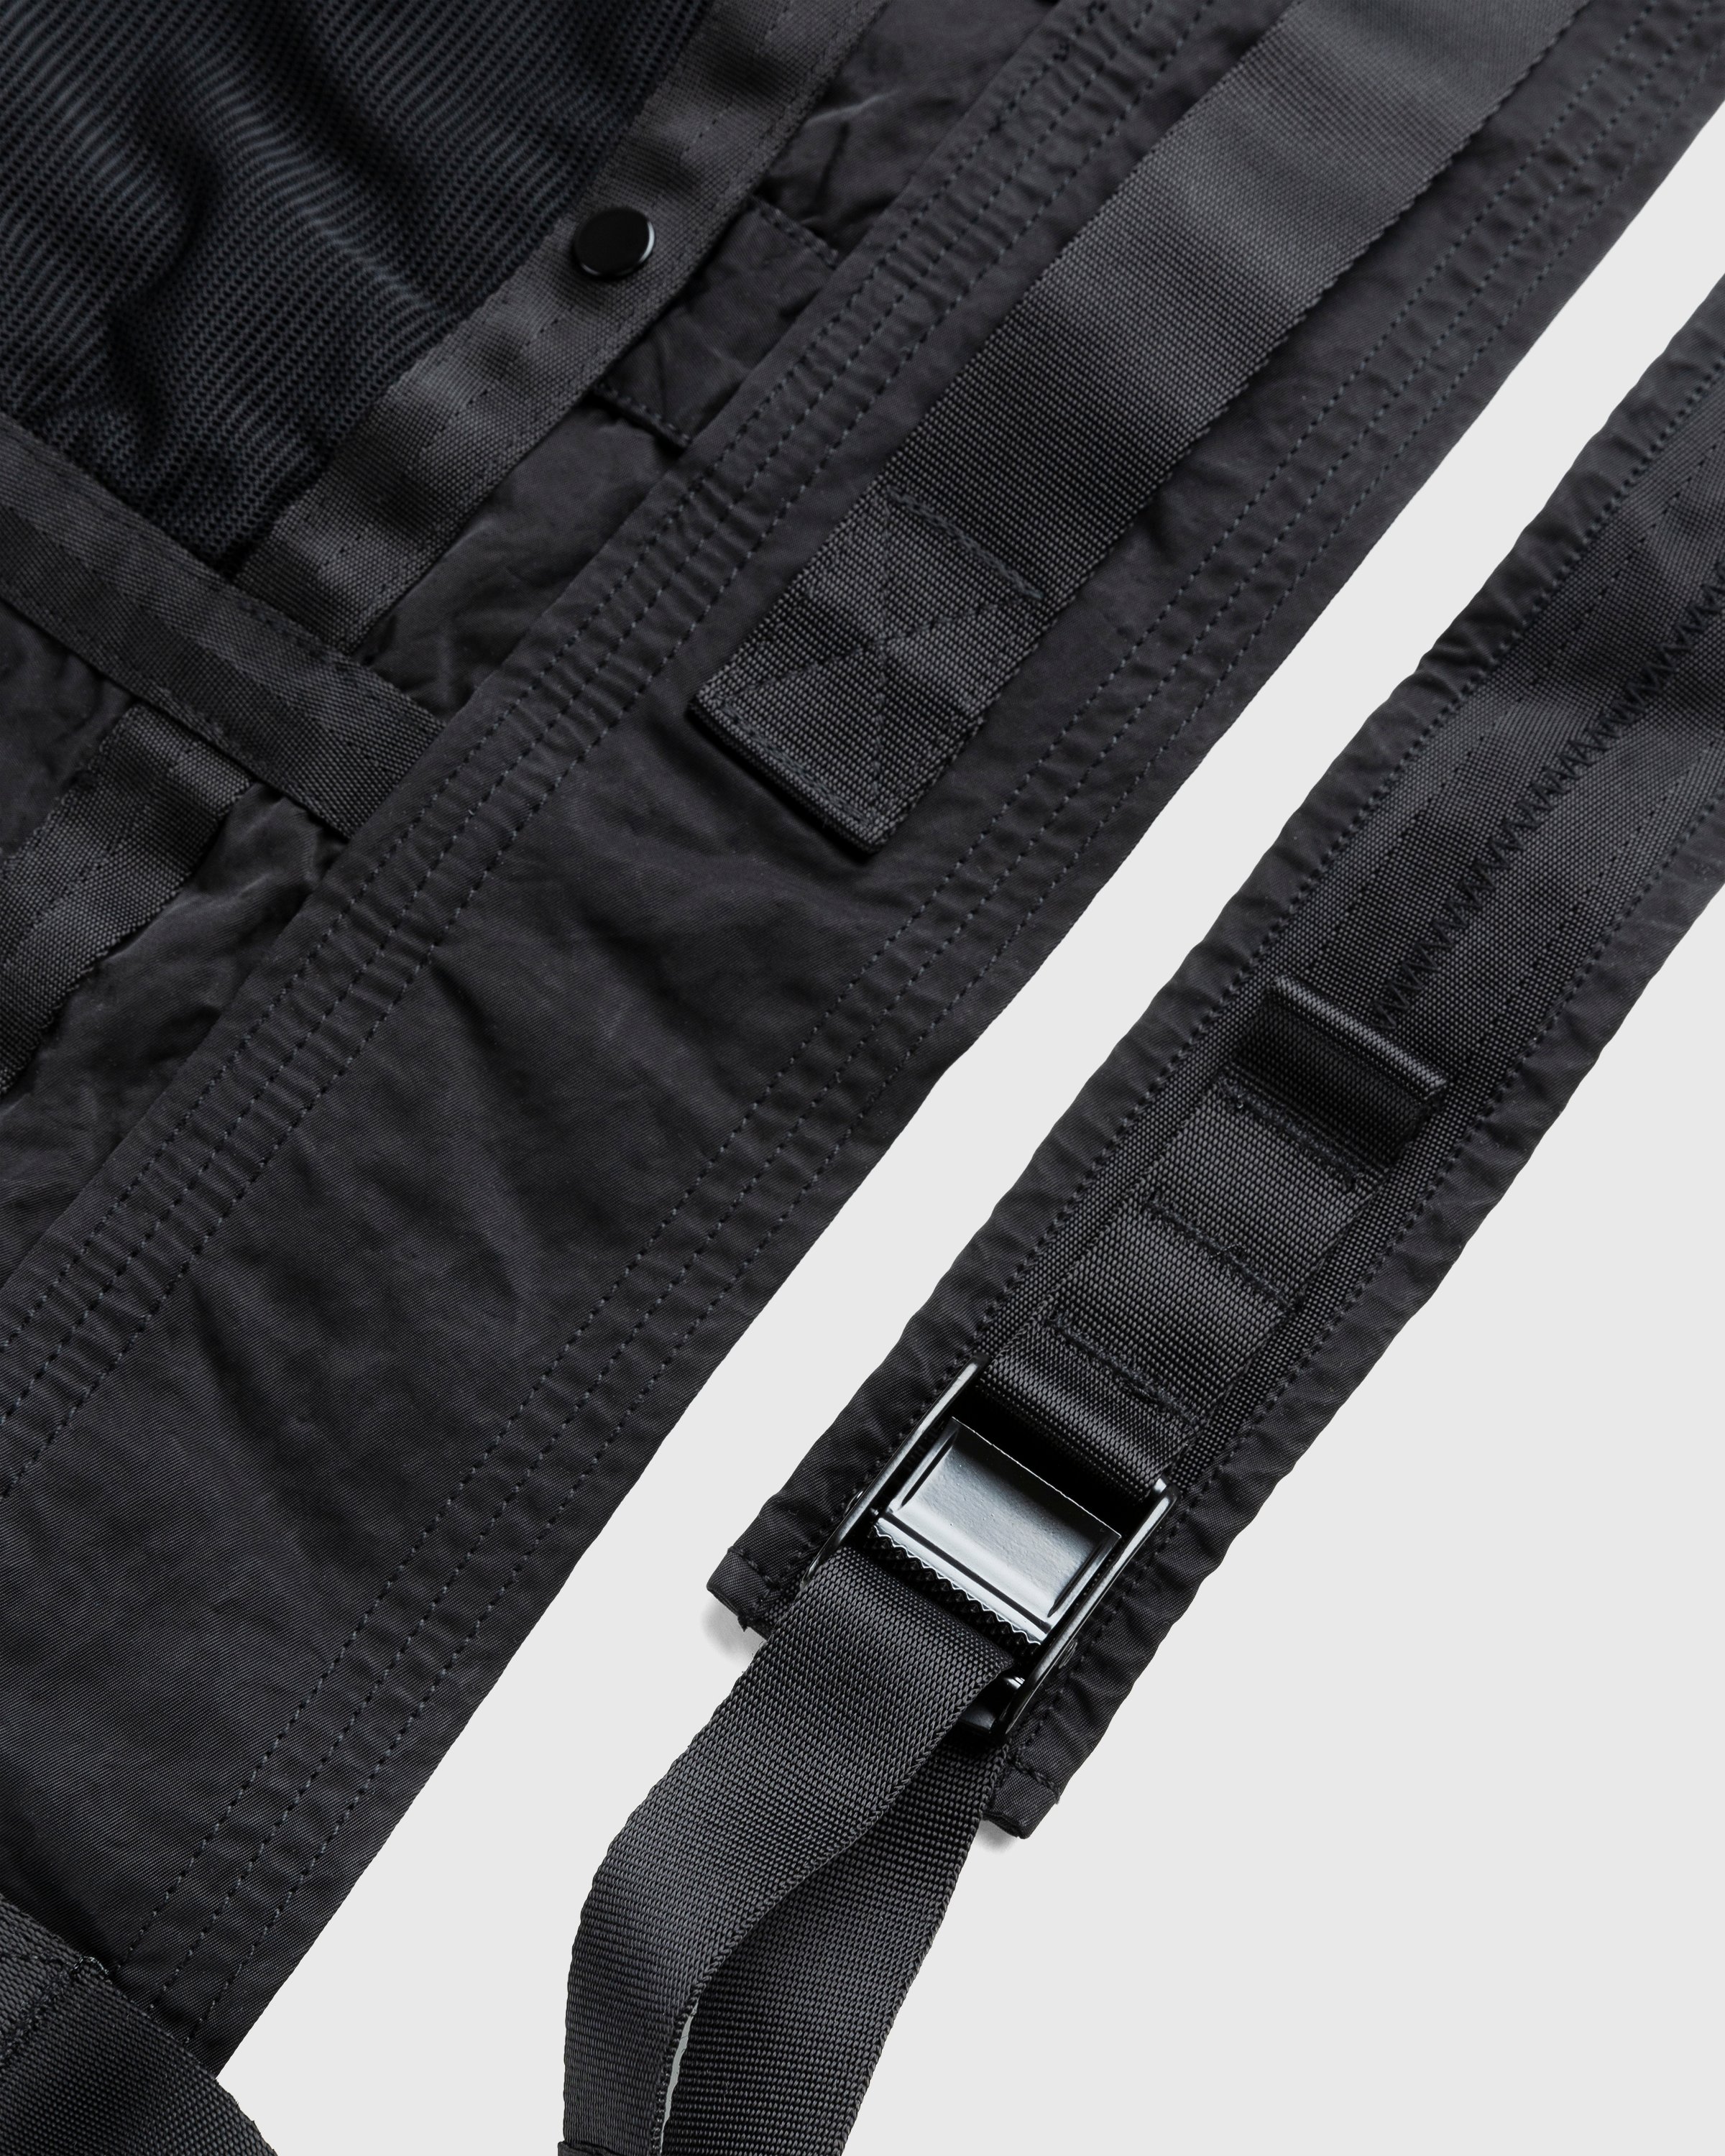 C.P. Company - Nylon B Messenger Bag Black - Accessories - Black - Image 4